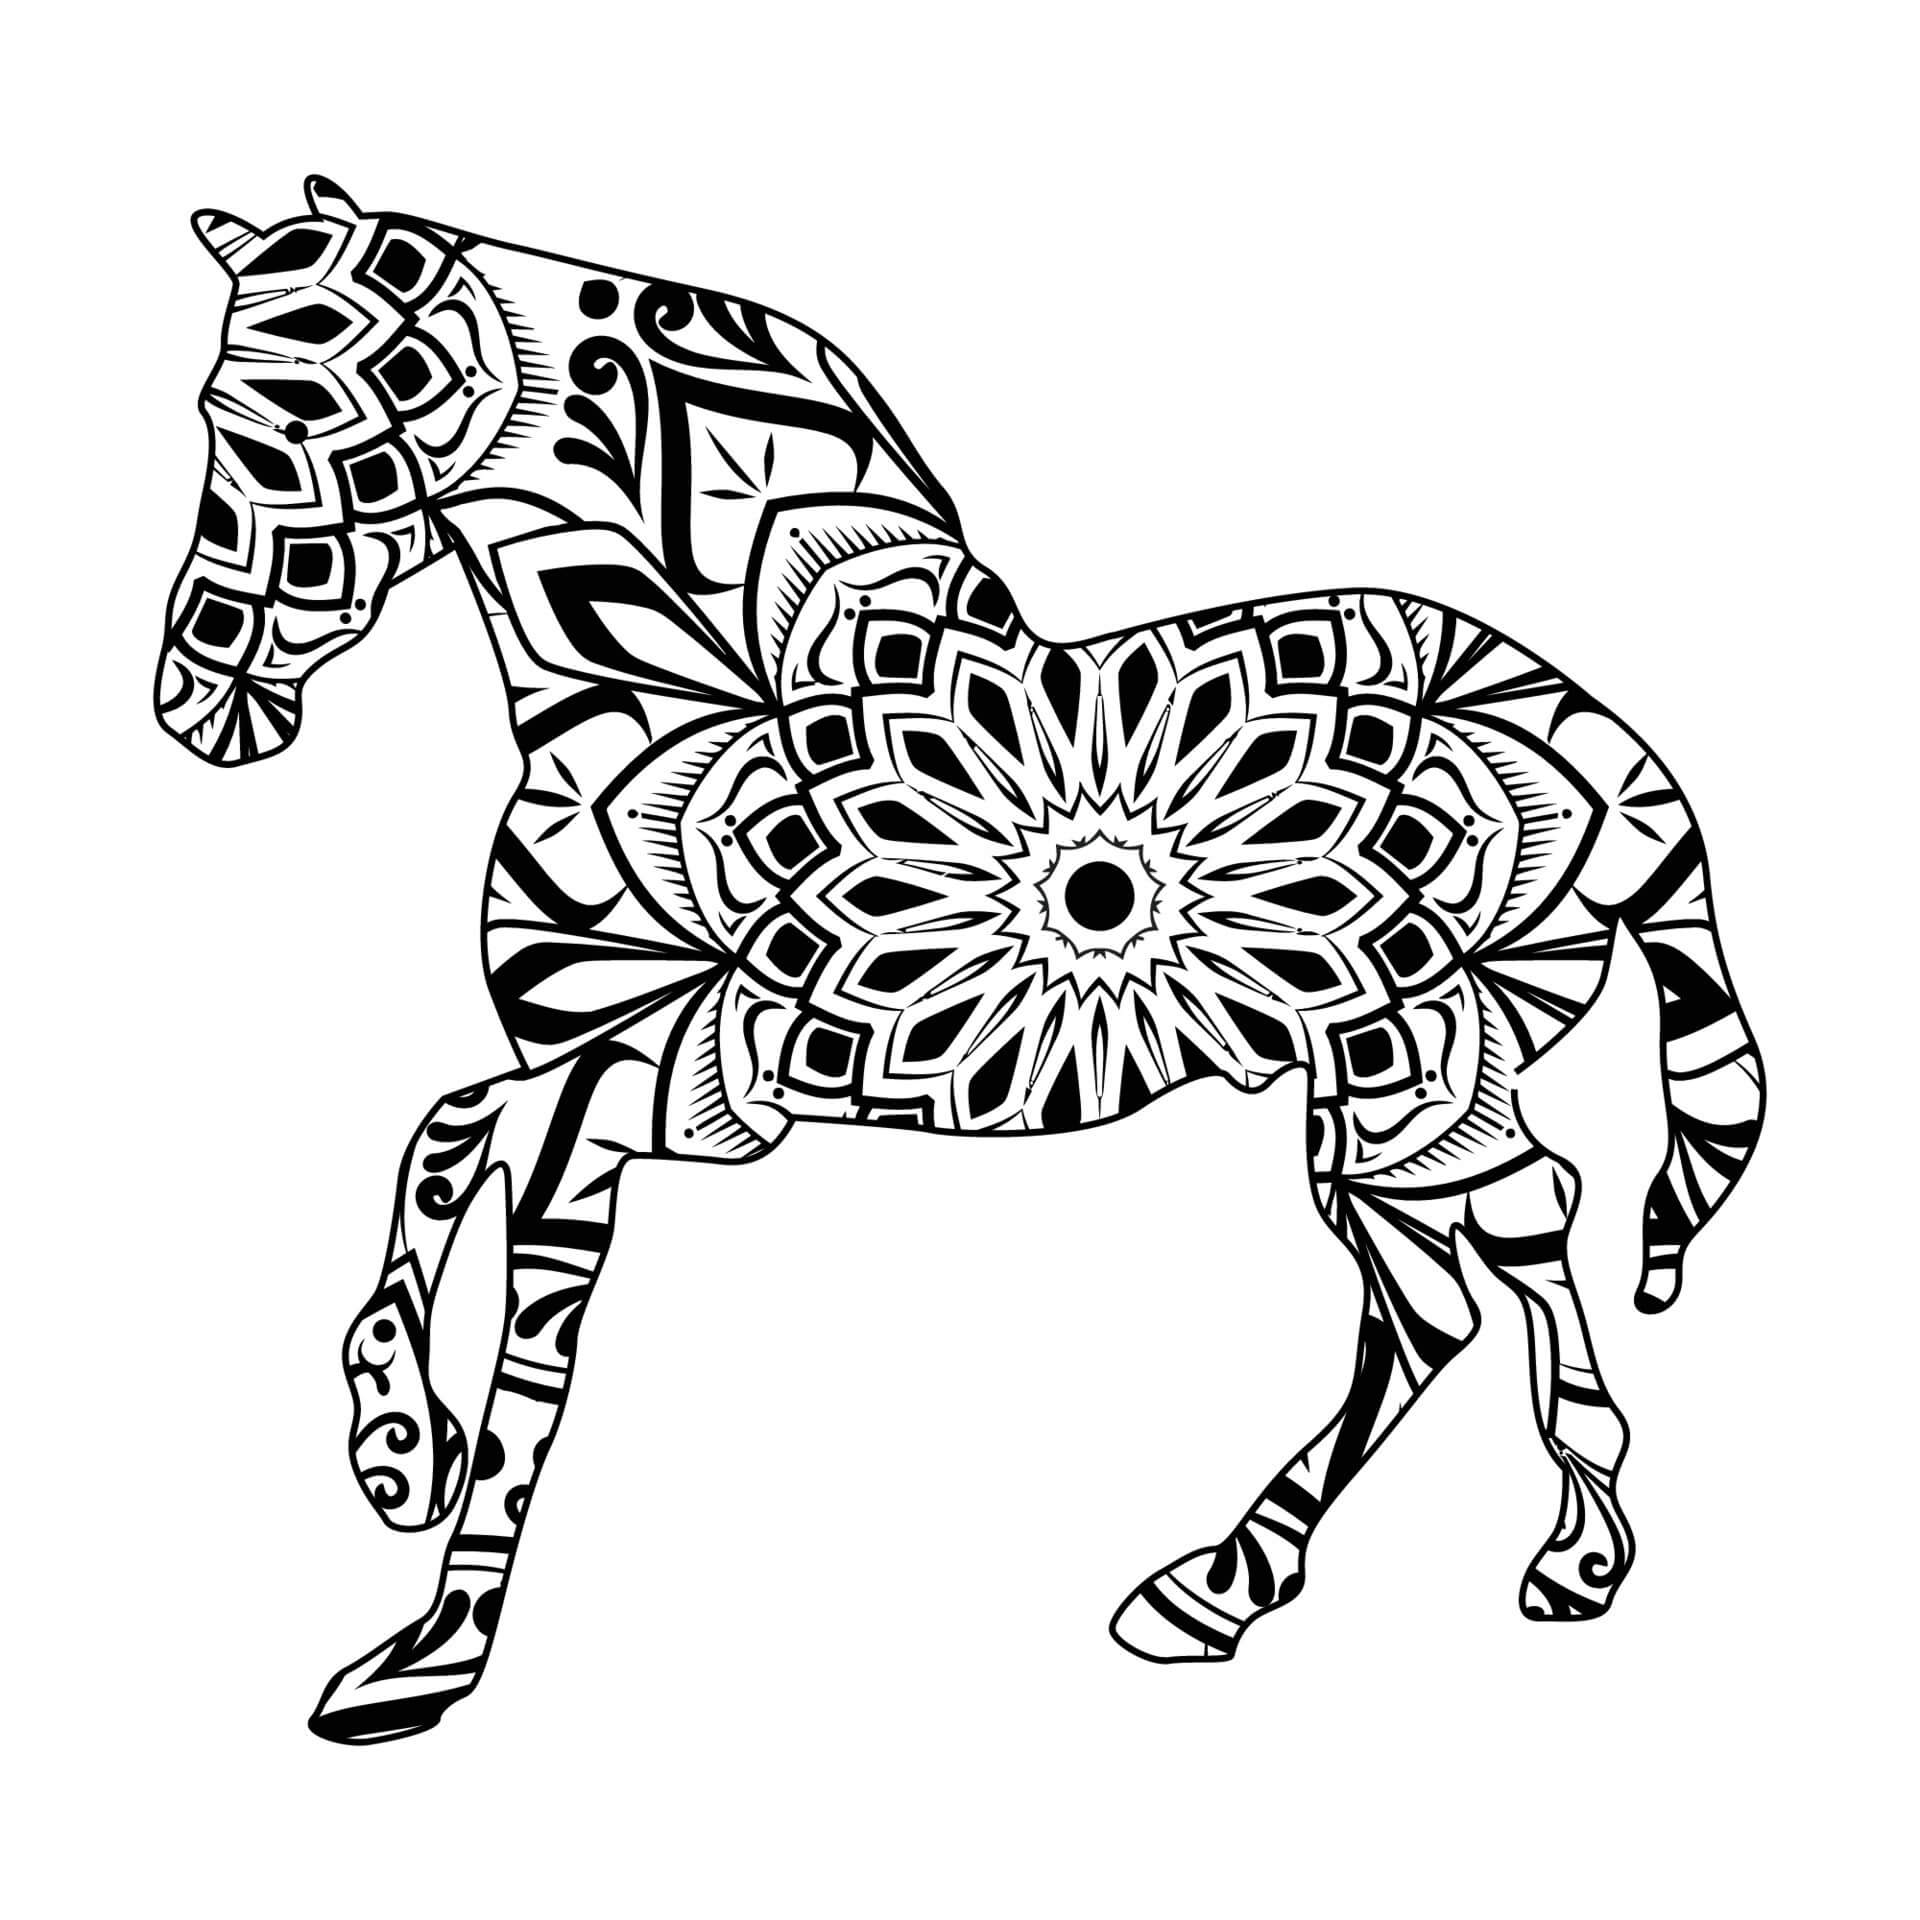 Mandala Horse Coloring Page - Sheet 3 Mandalas